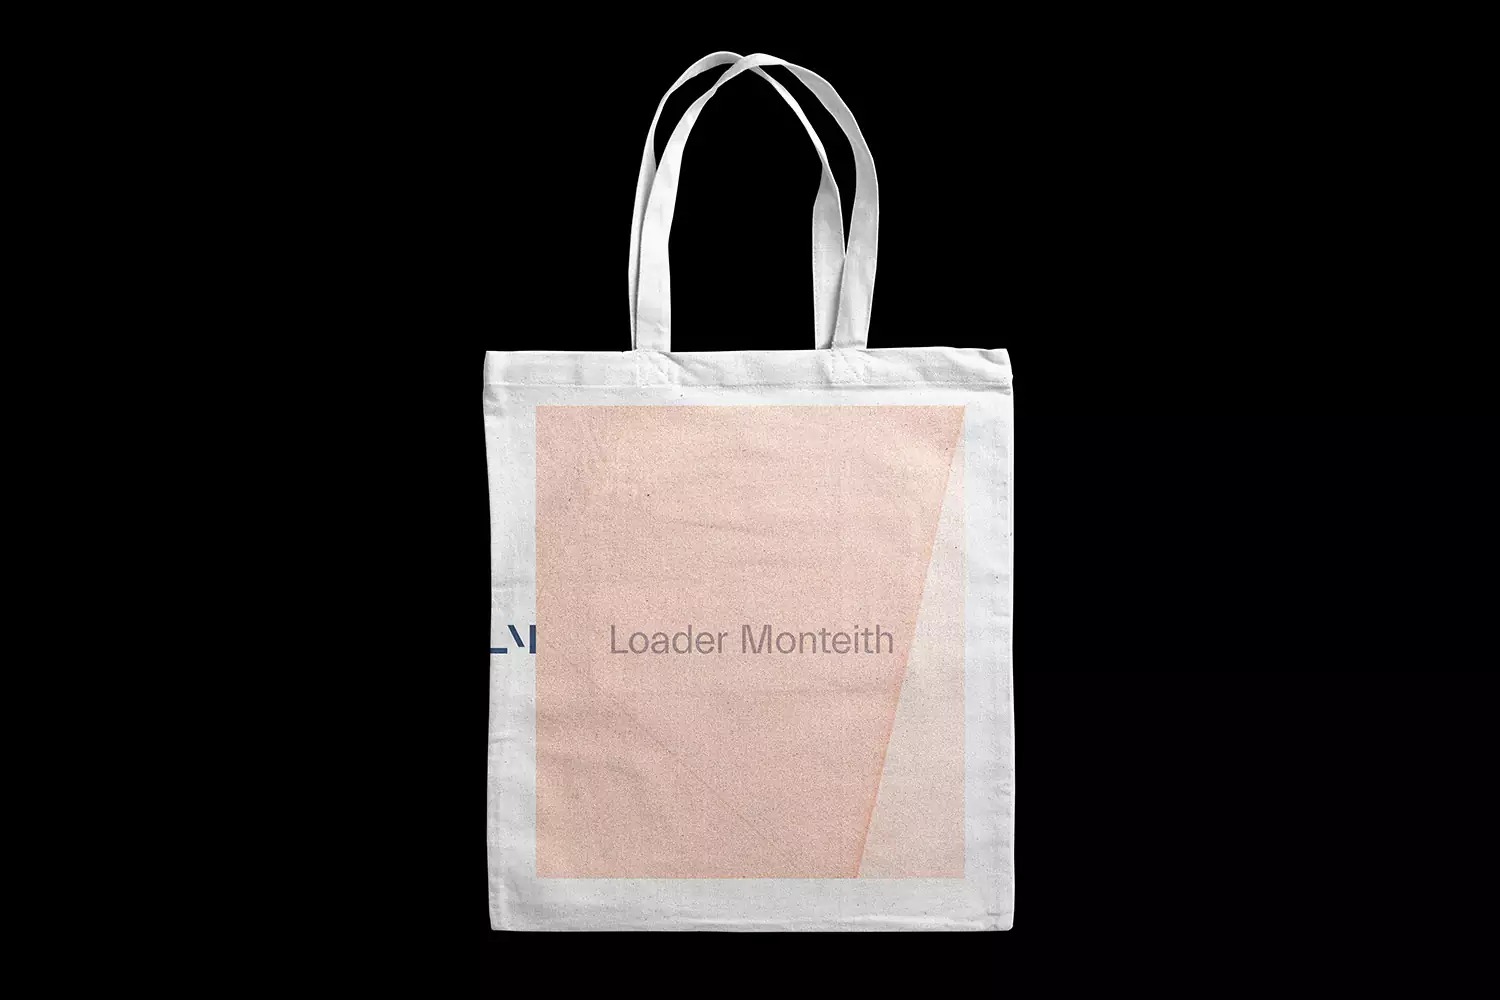 建筑事务所Loader Monteith品牌视觉设计